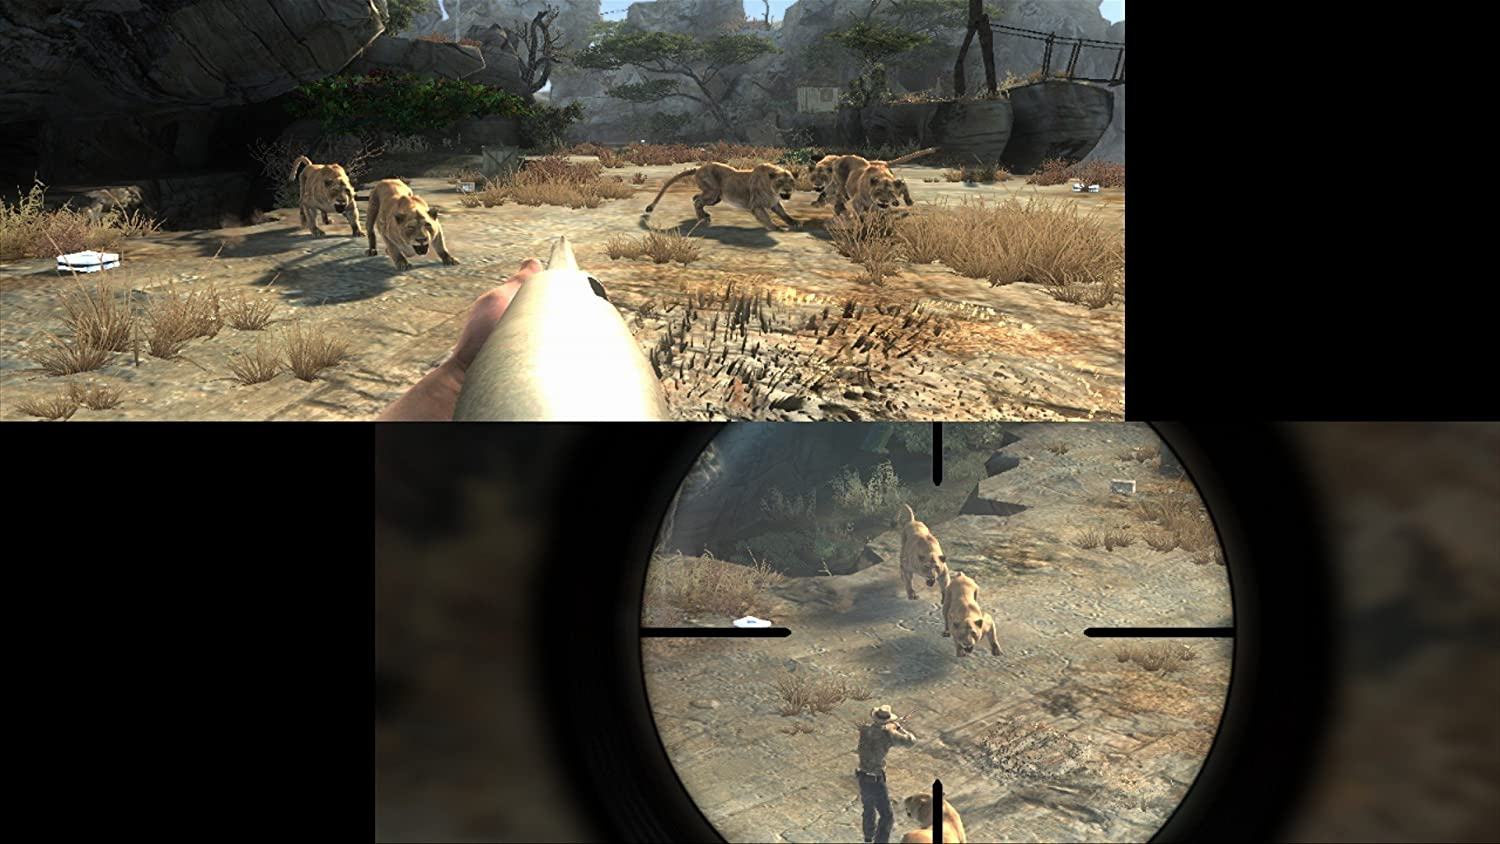 Cabela\'s Dangerous Hunts 2013 inkl. - Fearmaster 3] Shot Top [PlayStation